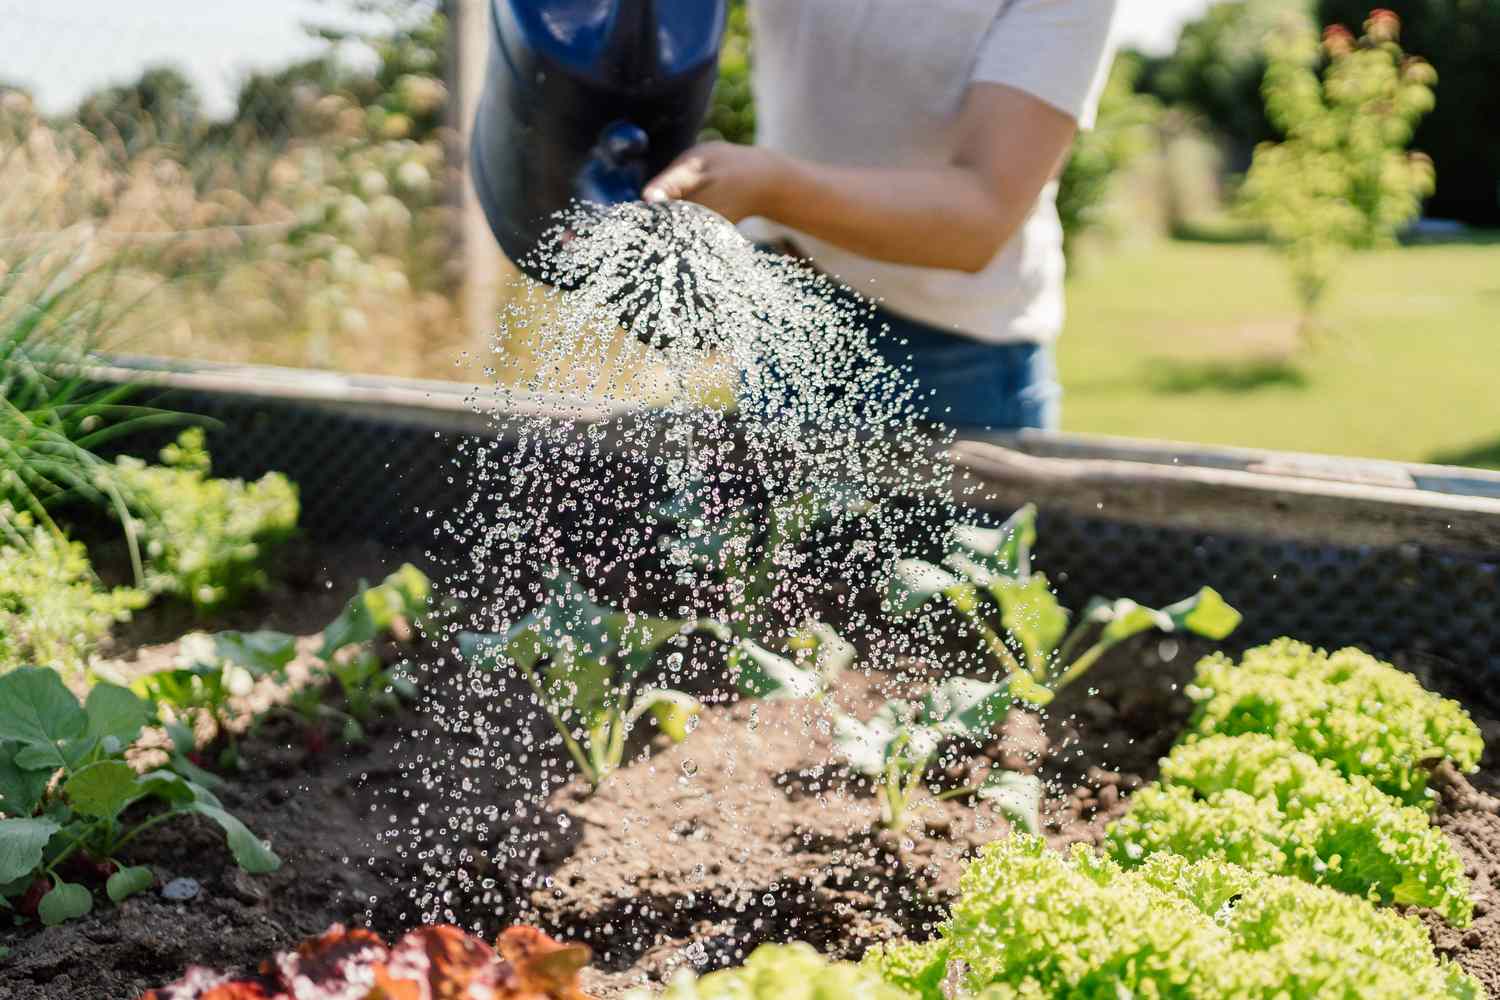 “Seasonal Gardening: Planning Your Garden for Year-Round Beauty”